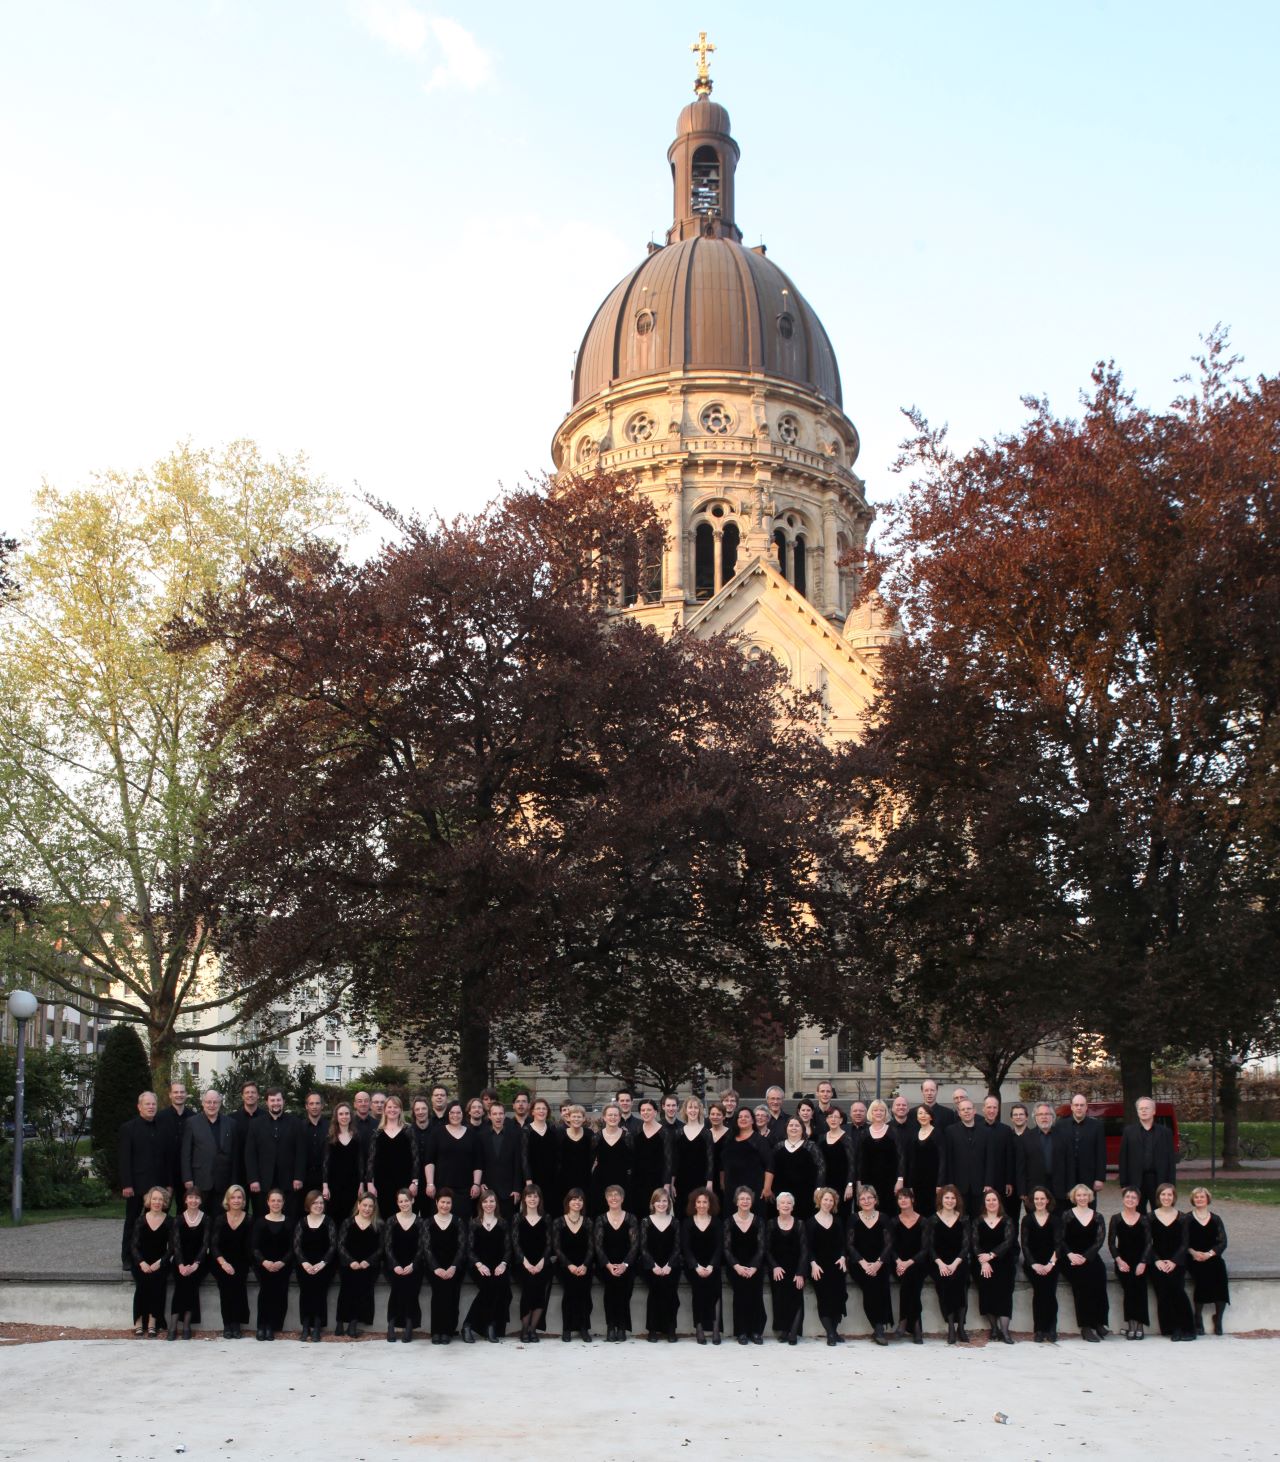 Gruppenbild des Bachchors in Mainz.